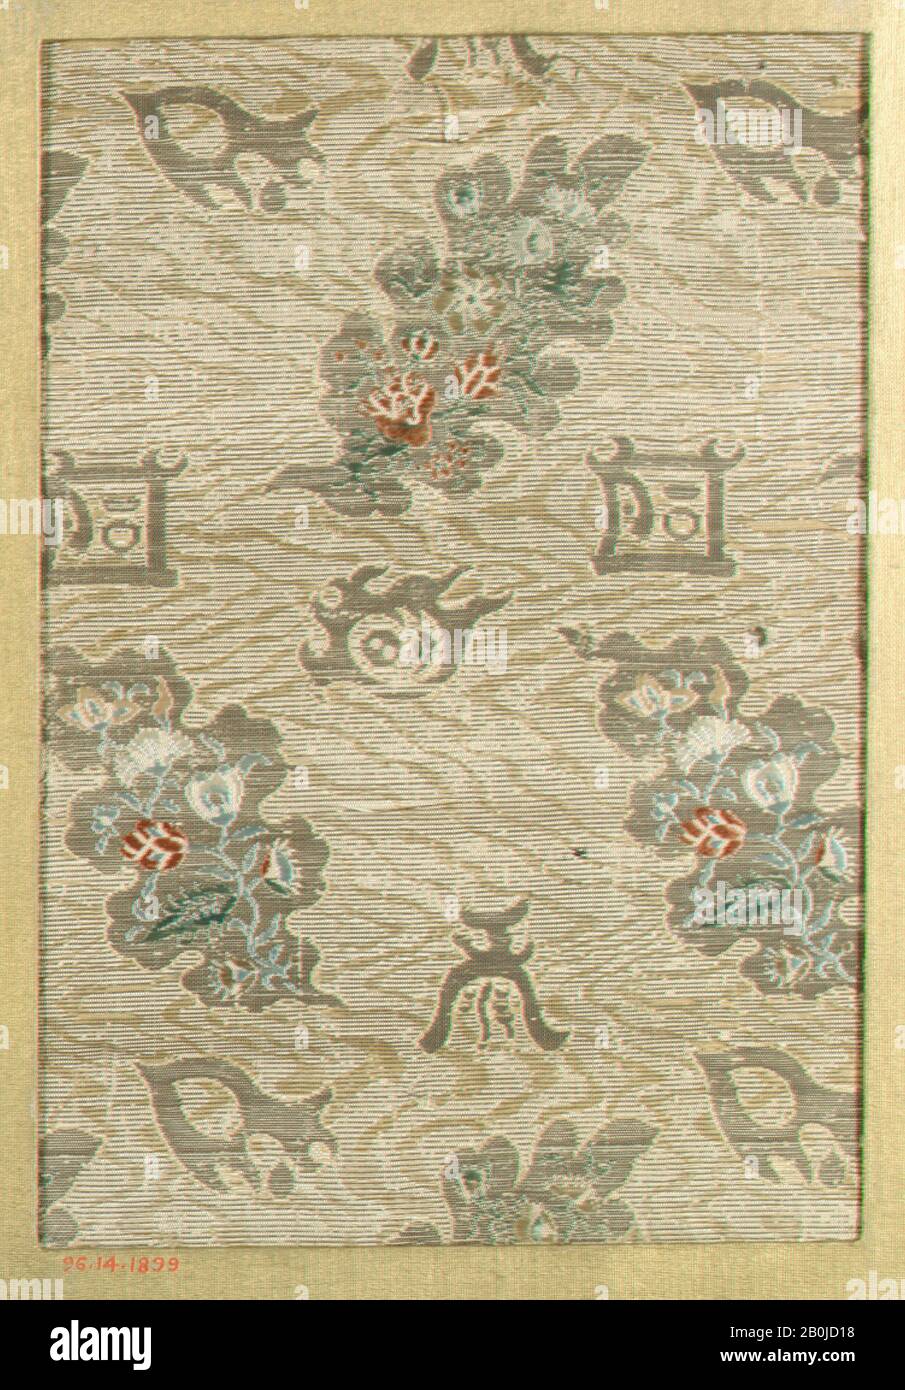 Piece, Japan, 18th–19th century, Japan, Silk, 7 1/4 x 5 in. (18.41 x 12.70 cm), Textiles-Woven Stock Photo